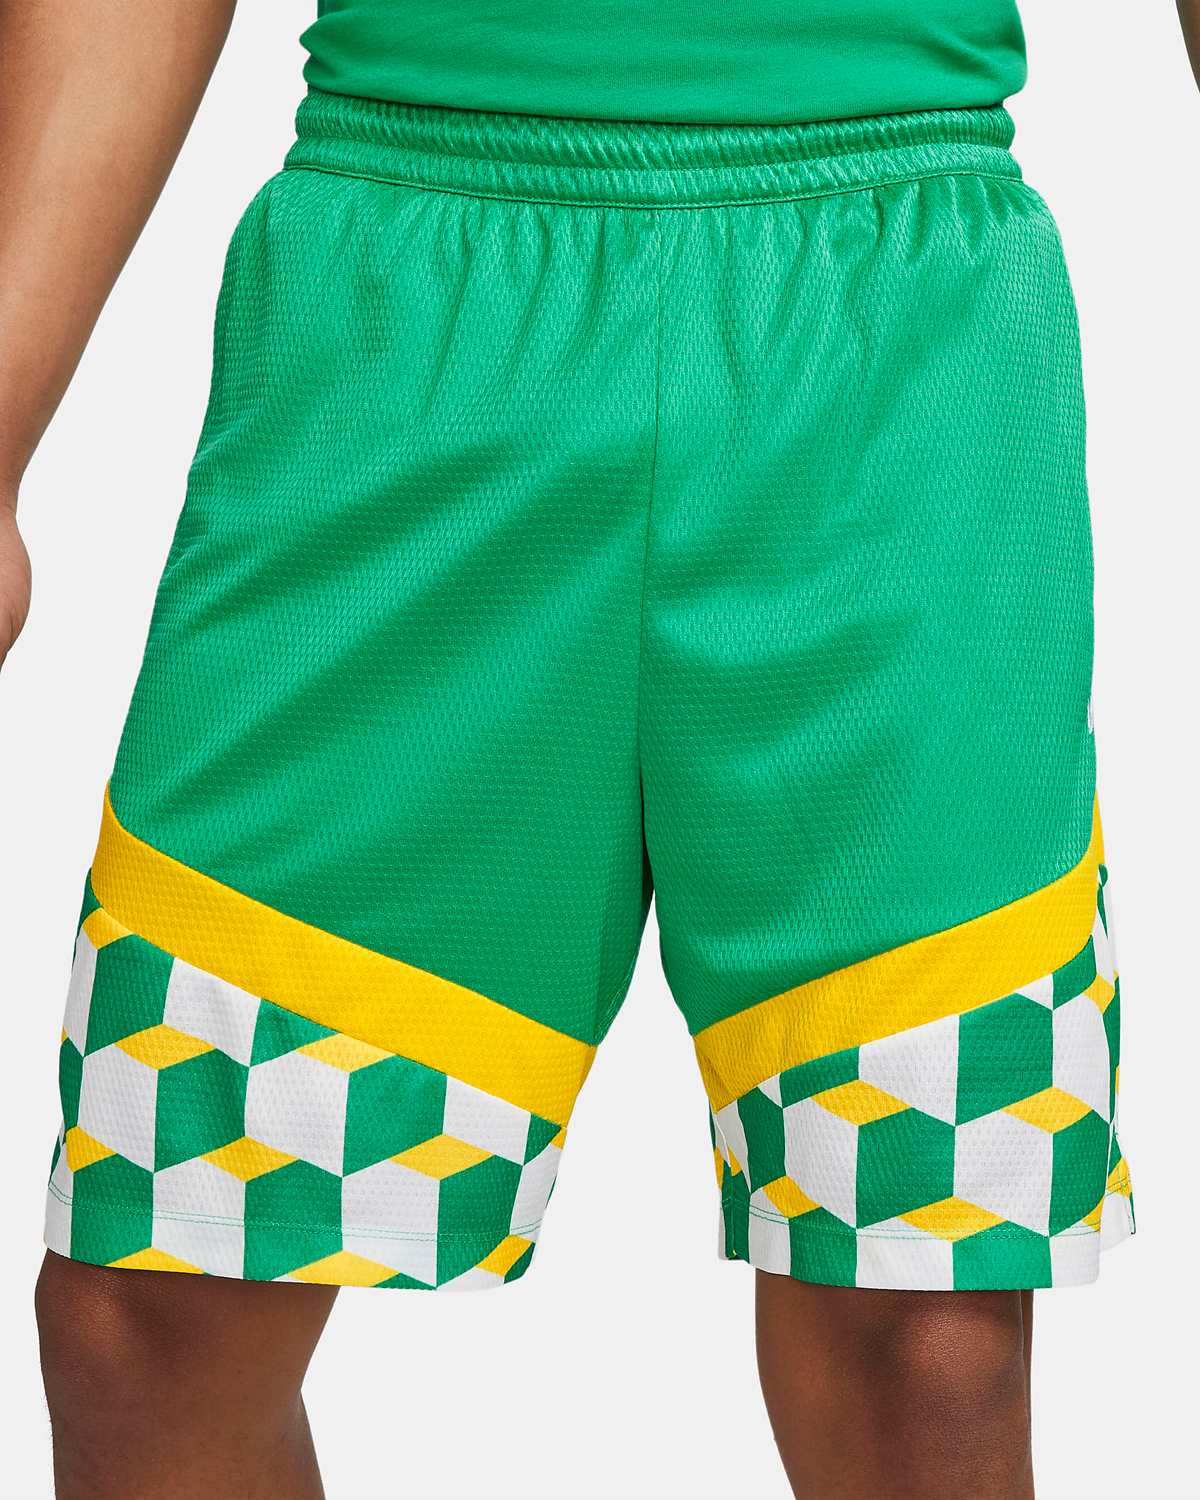 Nike-Icon-Basketball-Shorts-Stadium-Green-Speed-Yellow-1